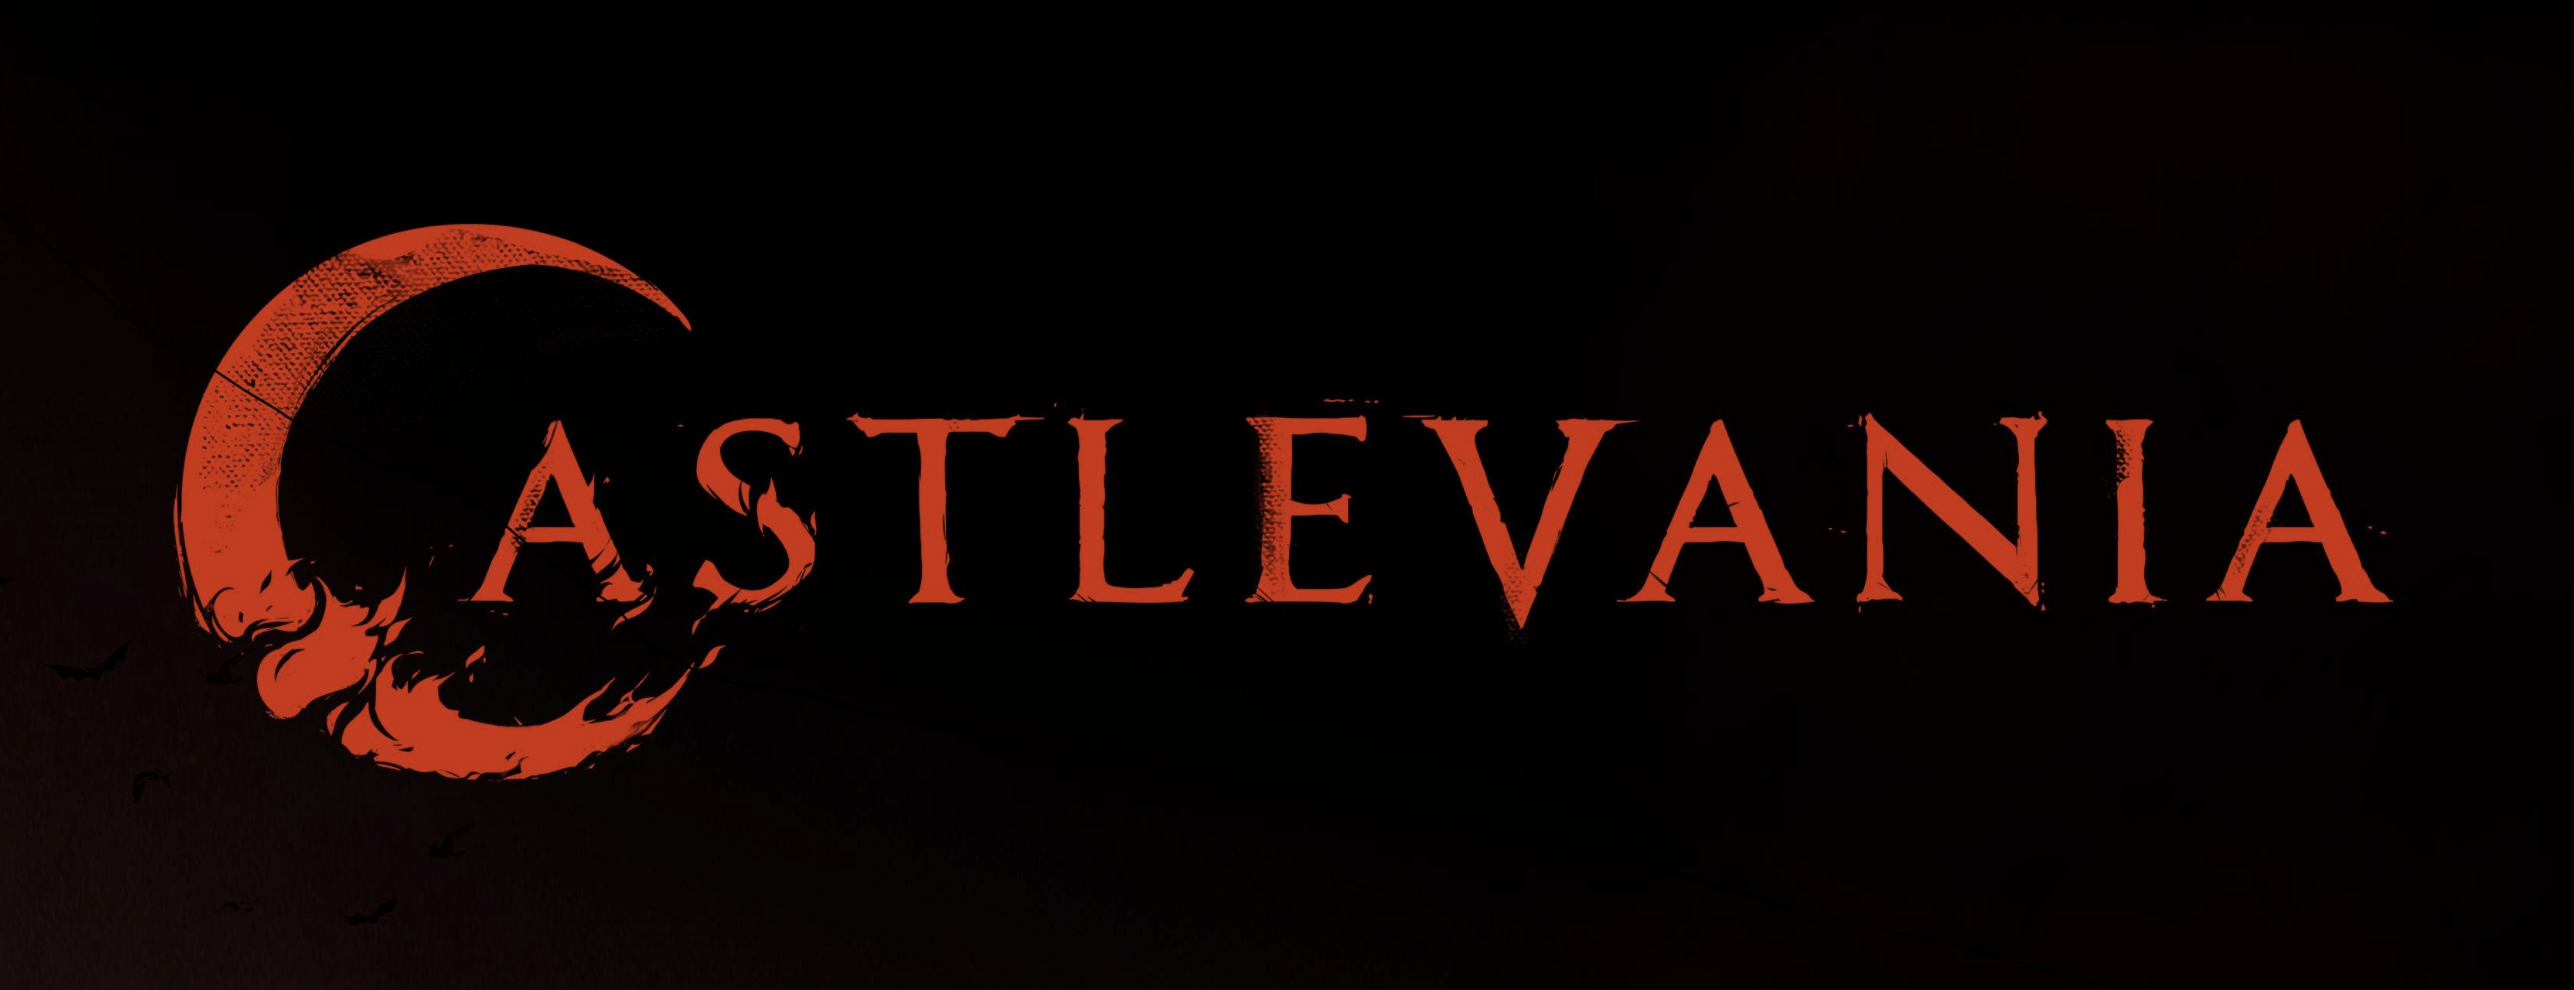 Castlevania Logo - Castlevania, Season 2 and doing Slow Burn right